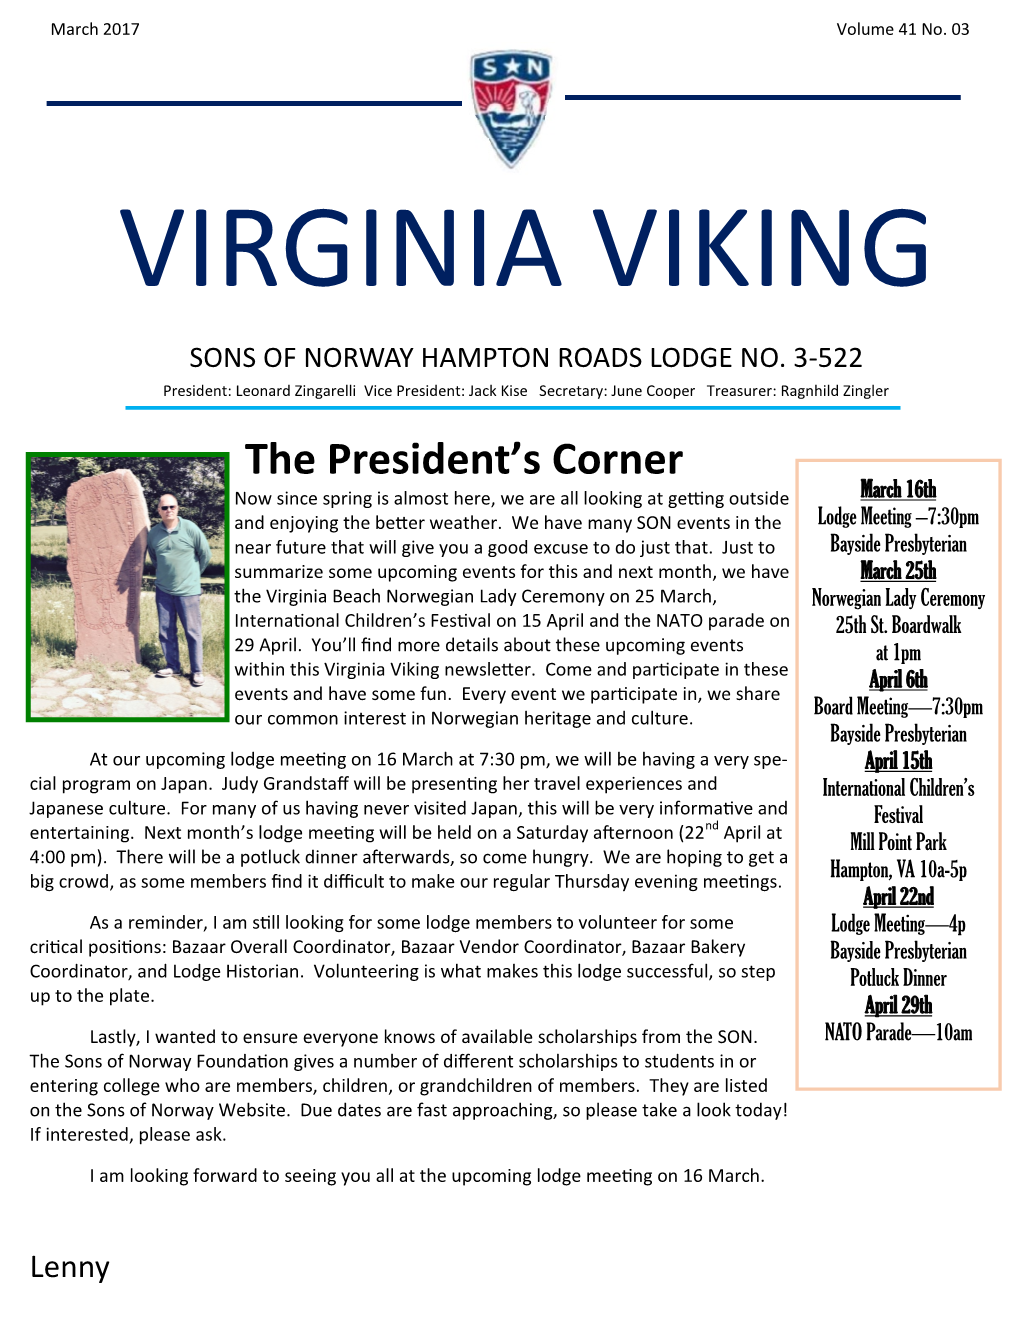 Virginia Viking March 2017